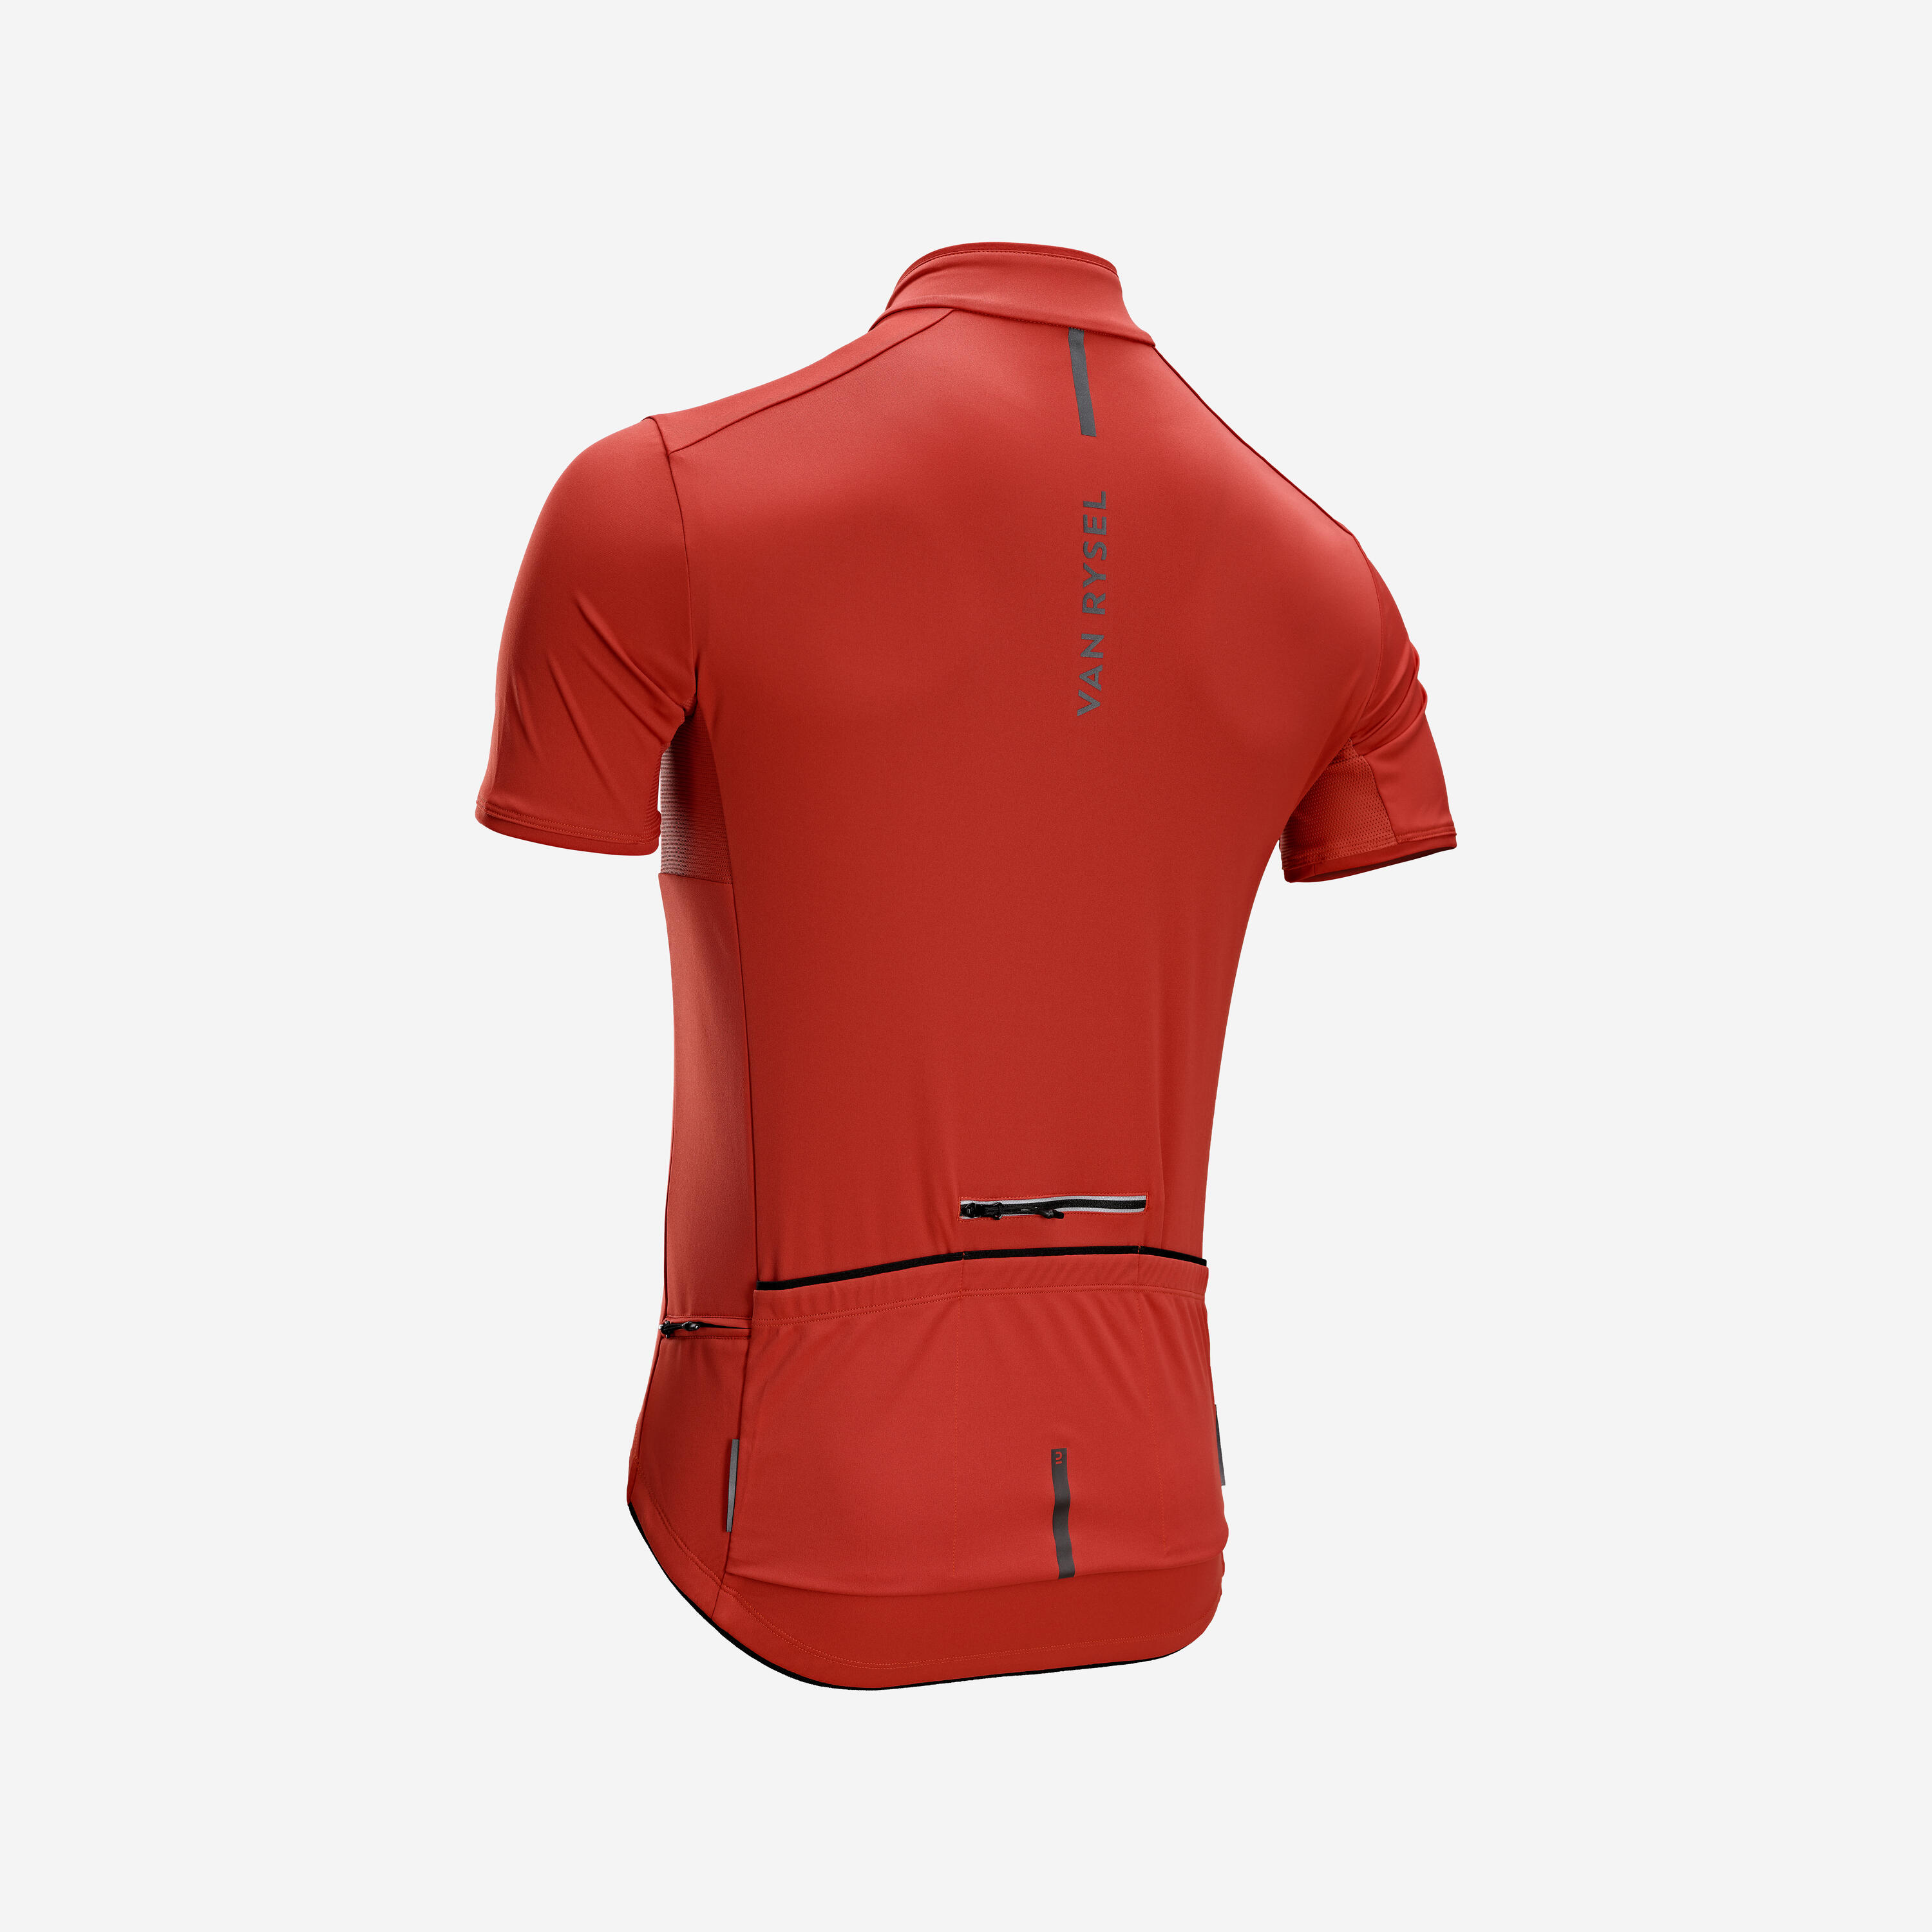 Men's Road Cycling Short-Sleeved Summer Jersey Endurance - Brick Red 3/6